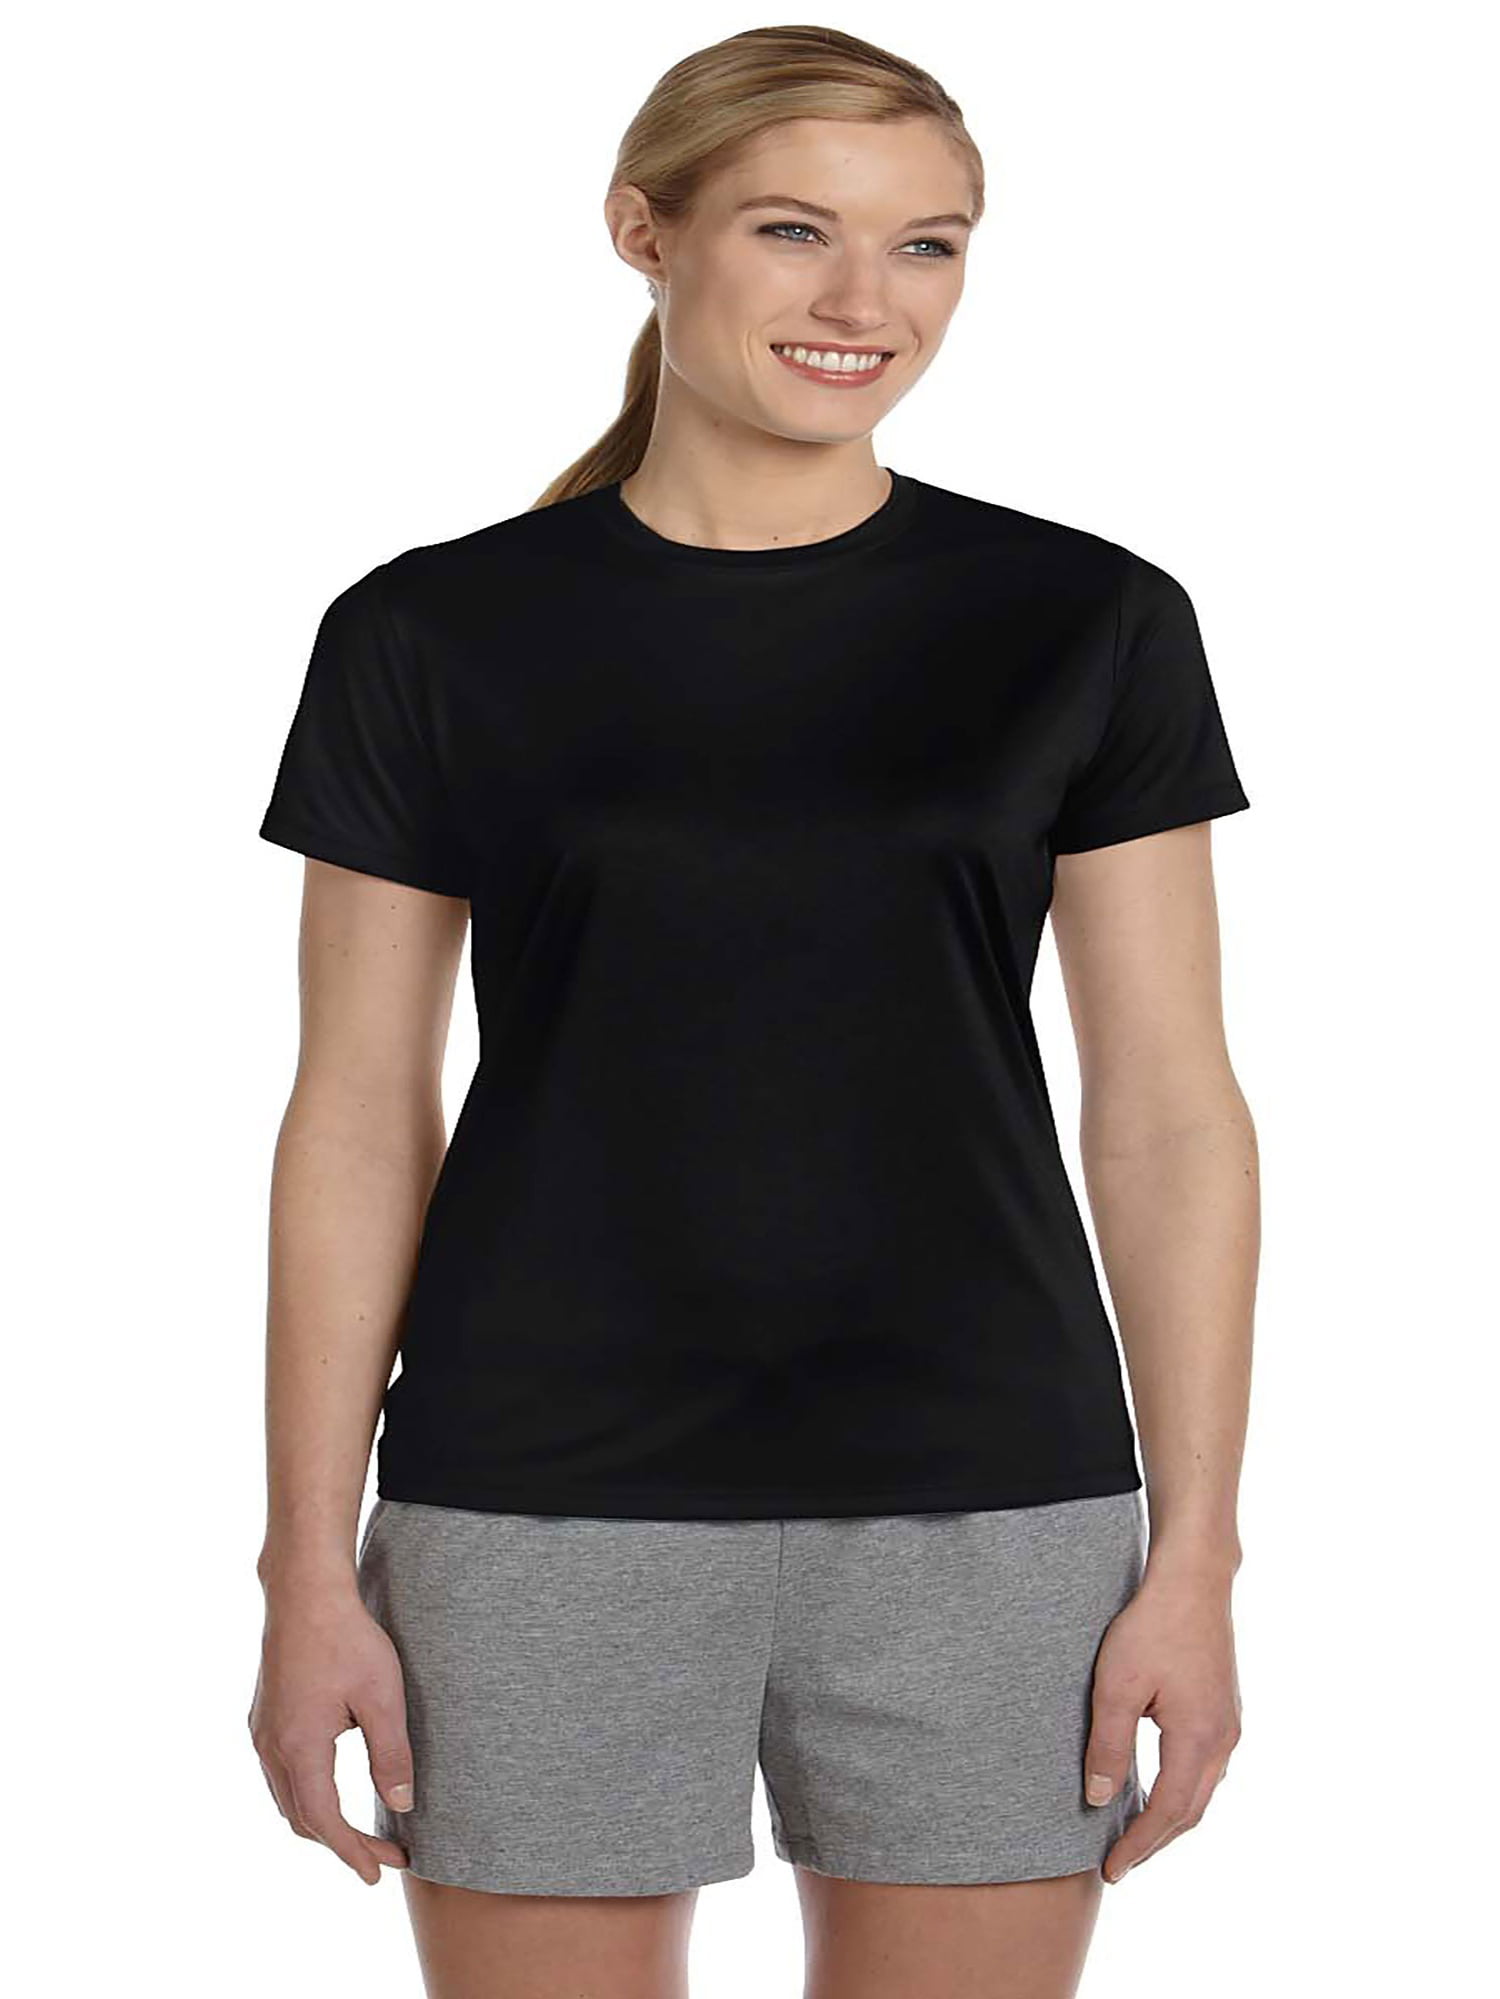 Hanes - Hanes Women's Cool DRI T-Shirt, Style 4830 - Walmart.com ...